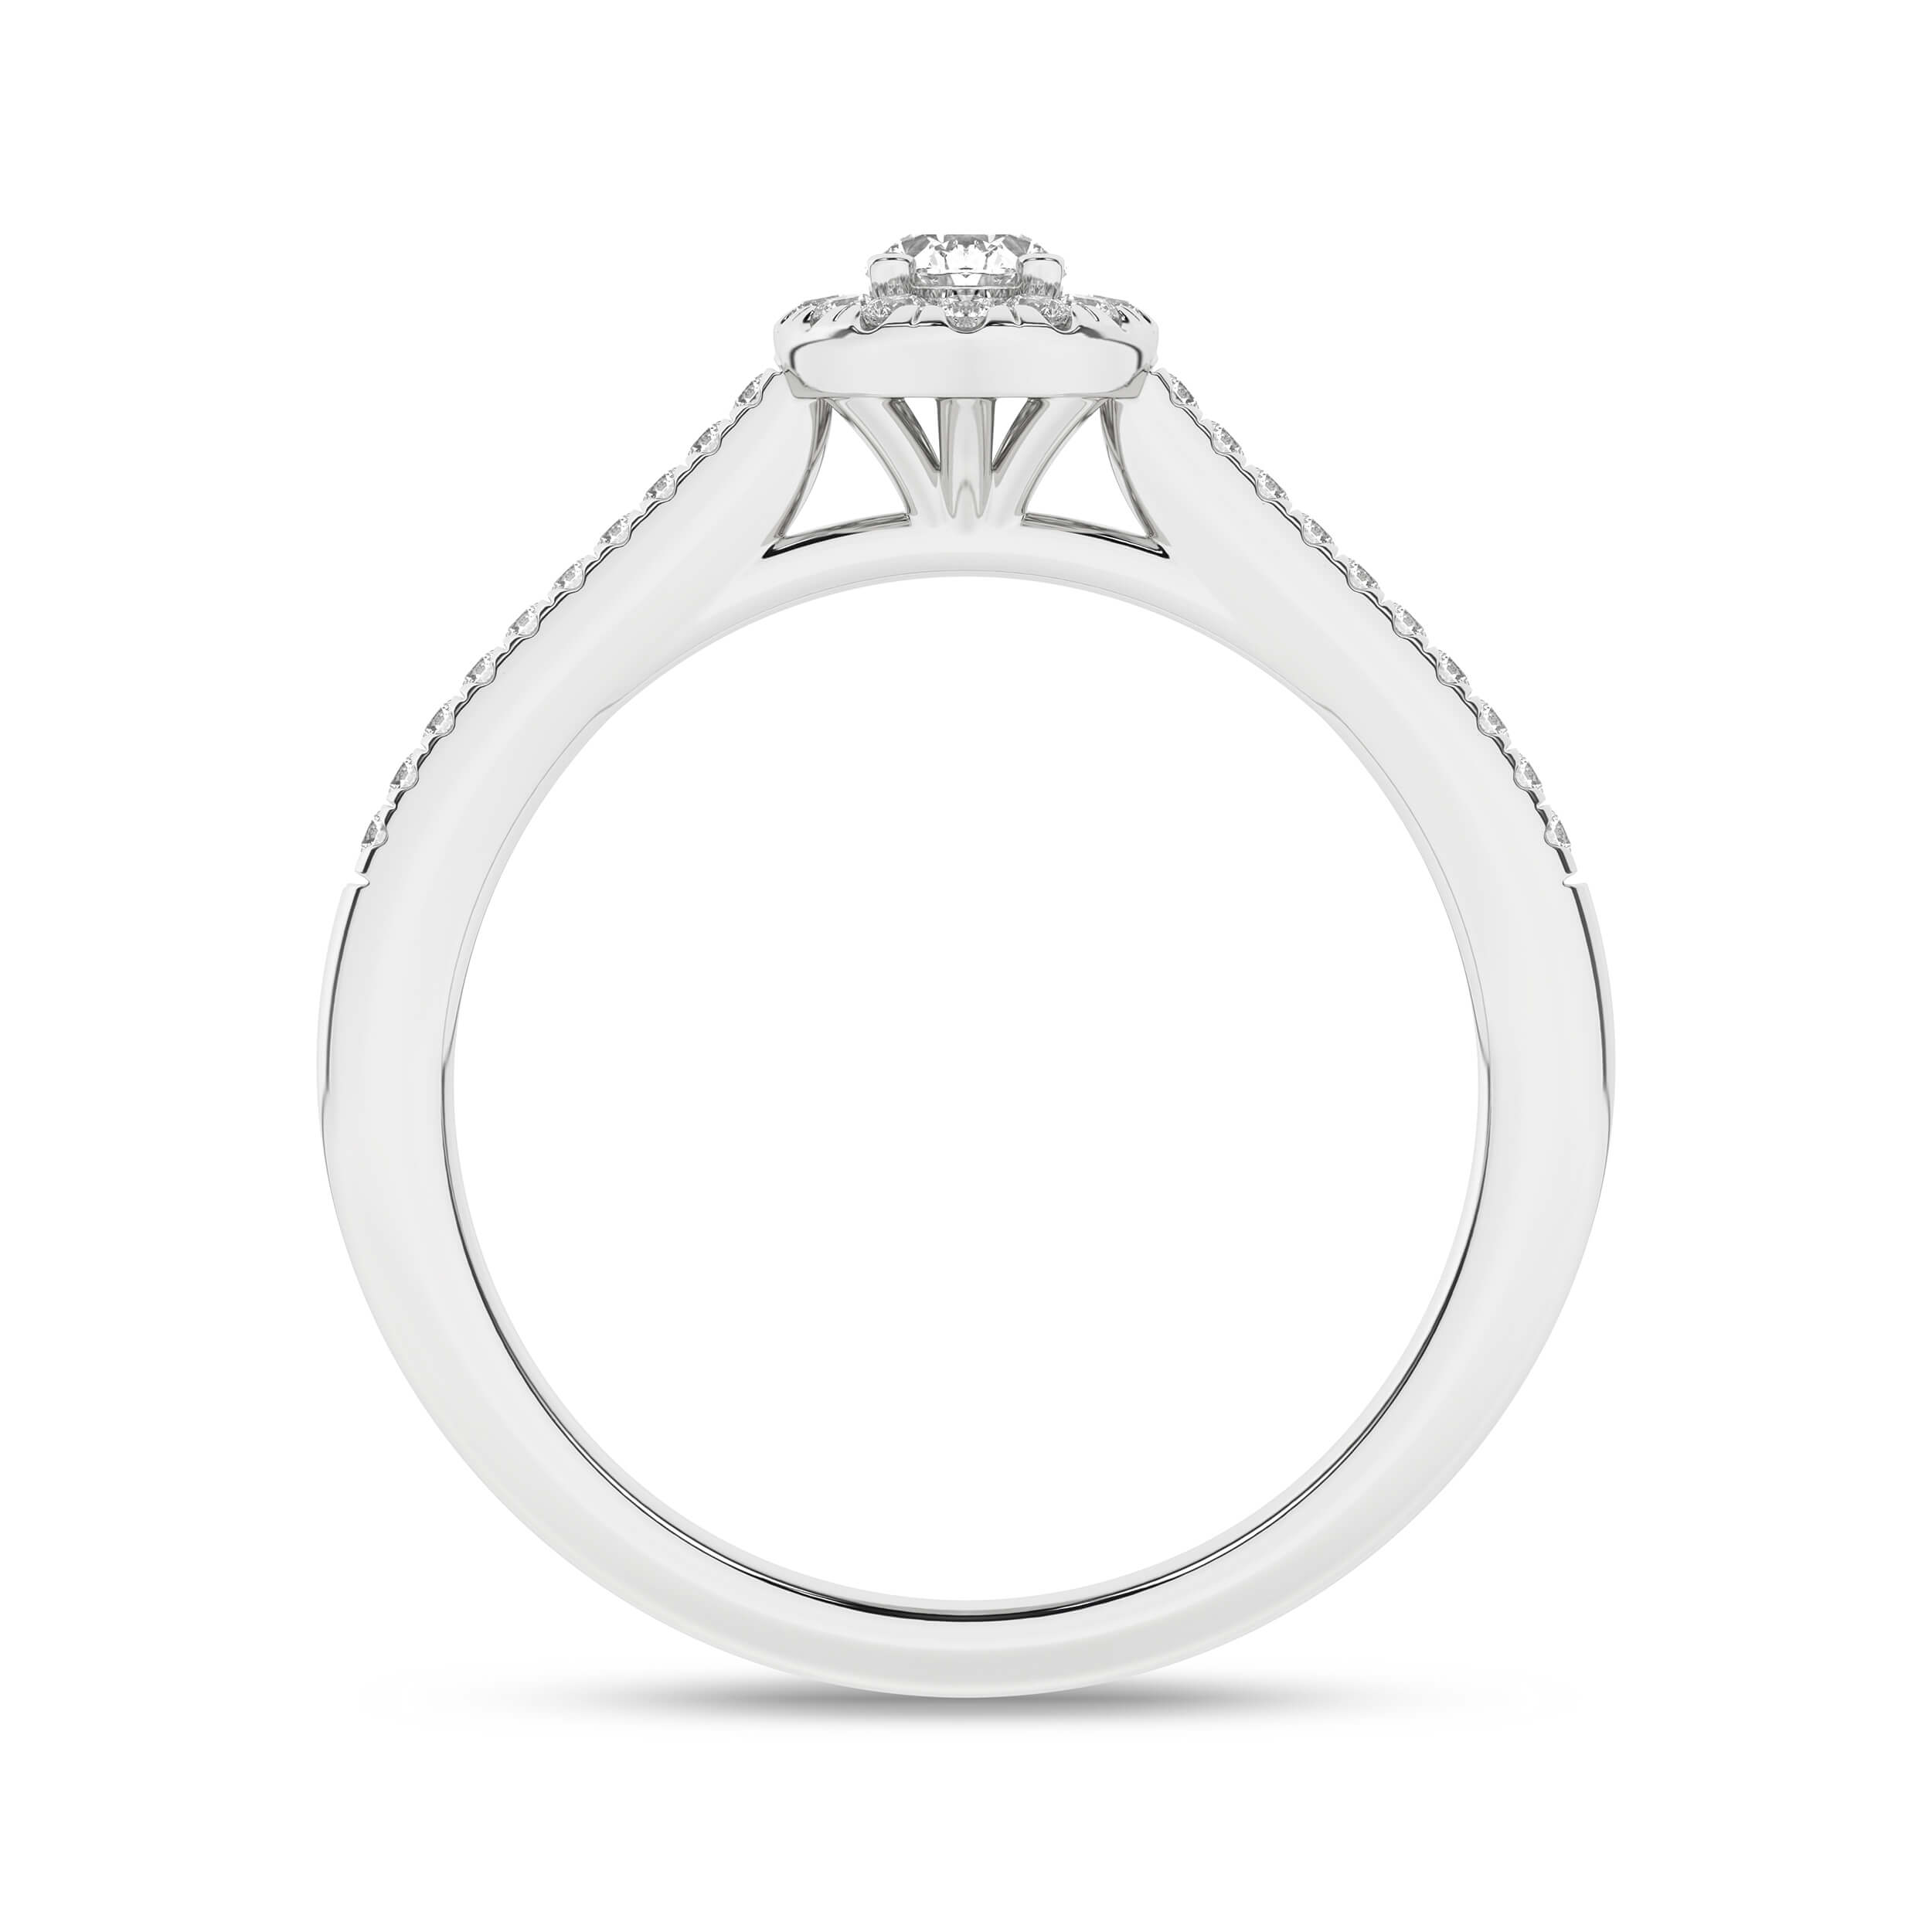 Inel de logodna din Aur Alb 14K cu Diamante 0.33Ct, articol RB20634EG, previzualizare foto 3